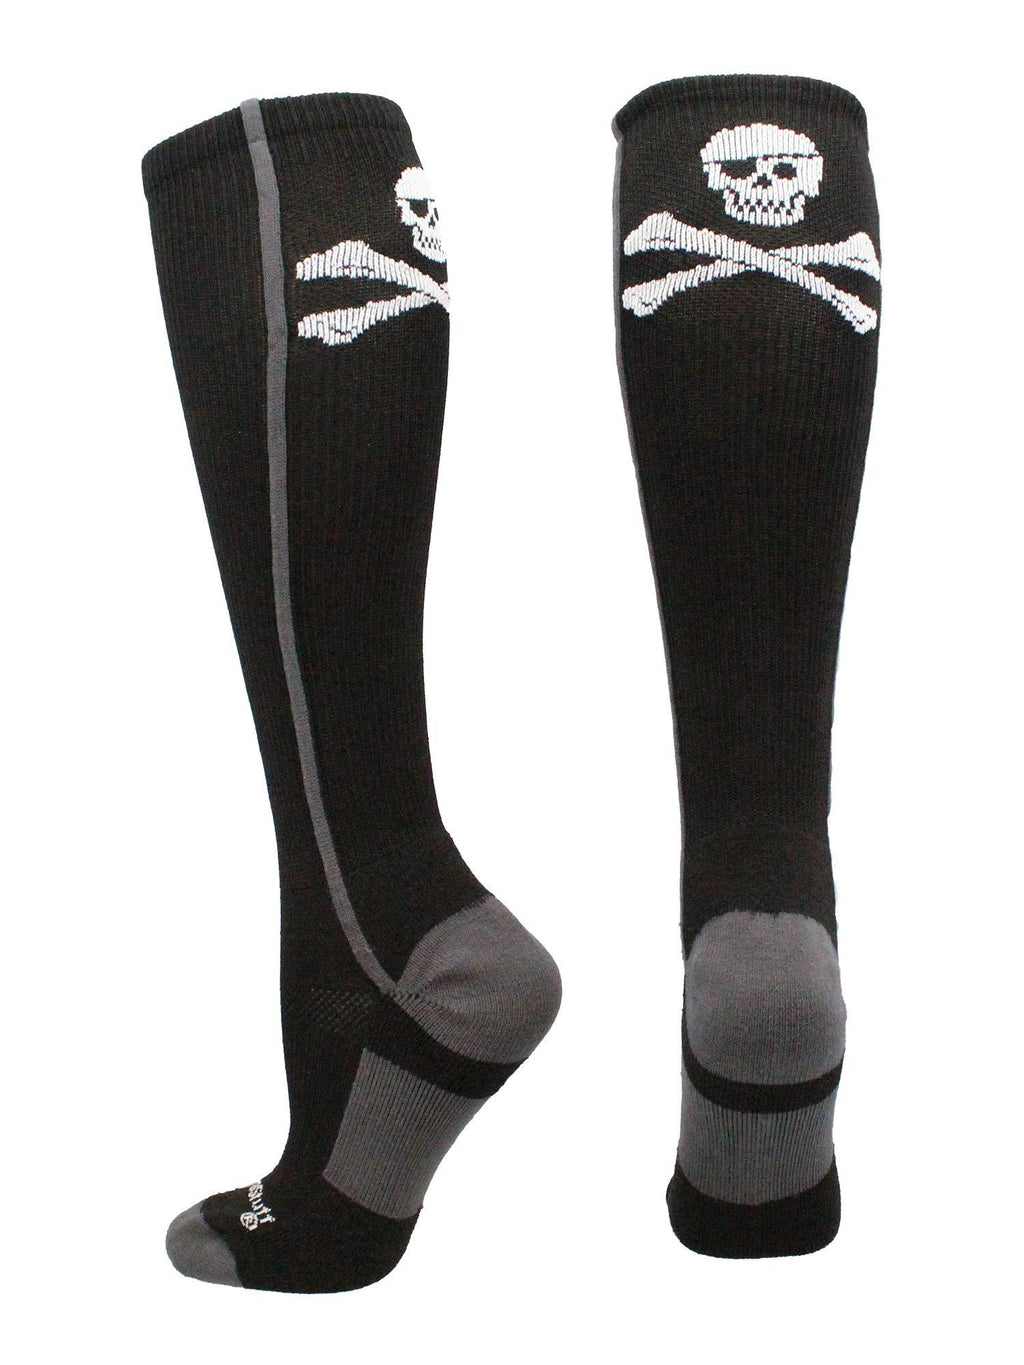 [AUSTRALIA] - MadSportsStuff Pirate Skull and Crossbones (Jolly Roger) Over The Calf Socks Black/Graphite Large 